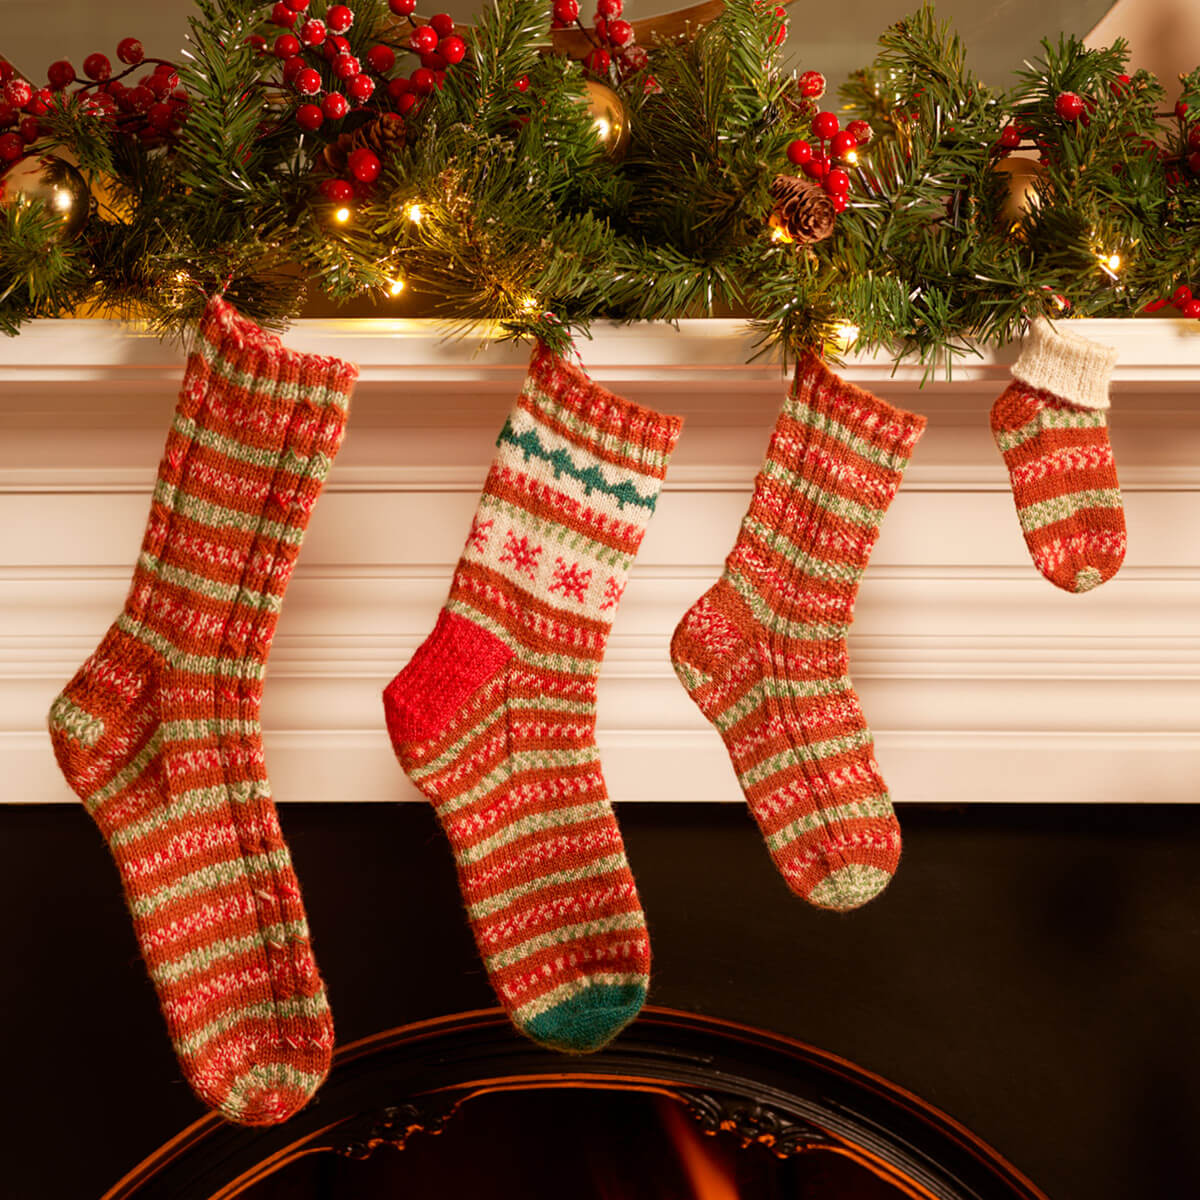 Signature 4-Ply Christmas Sock Yarn